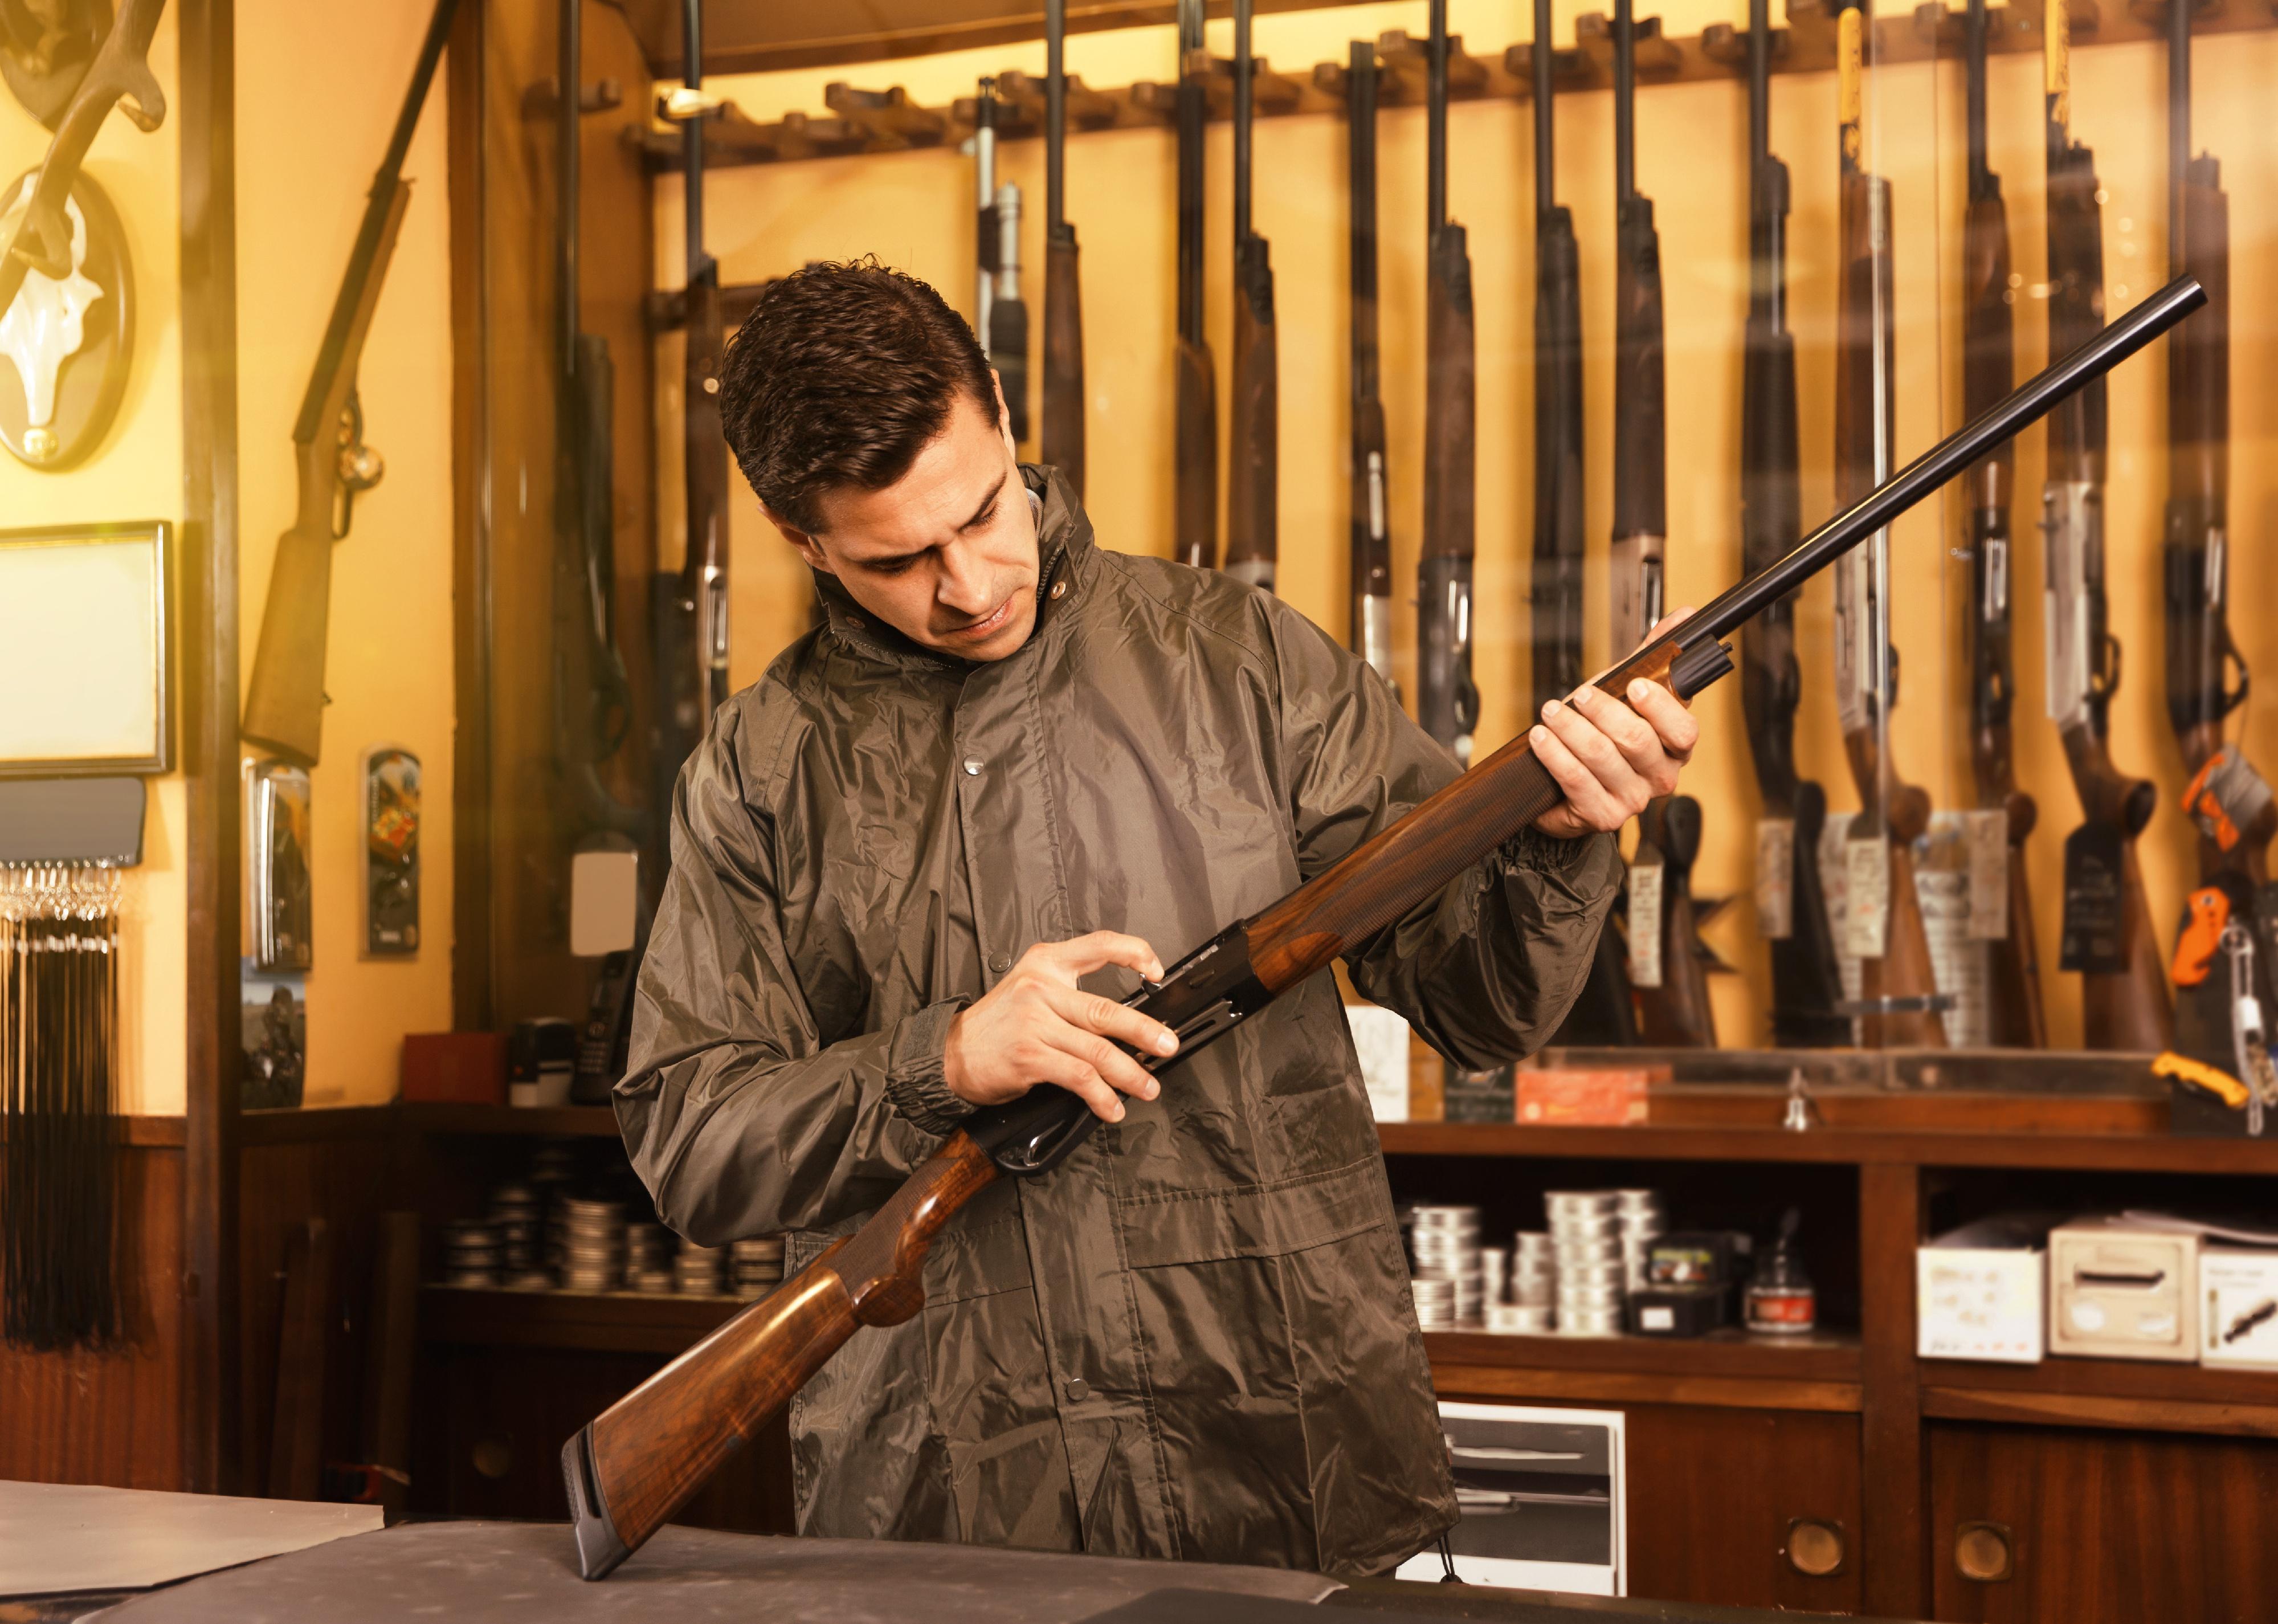 Portrait of person in gun shop showing rifle.